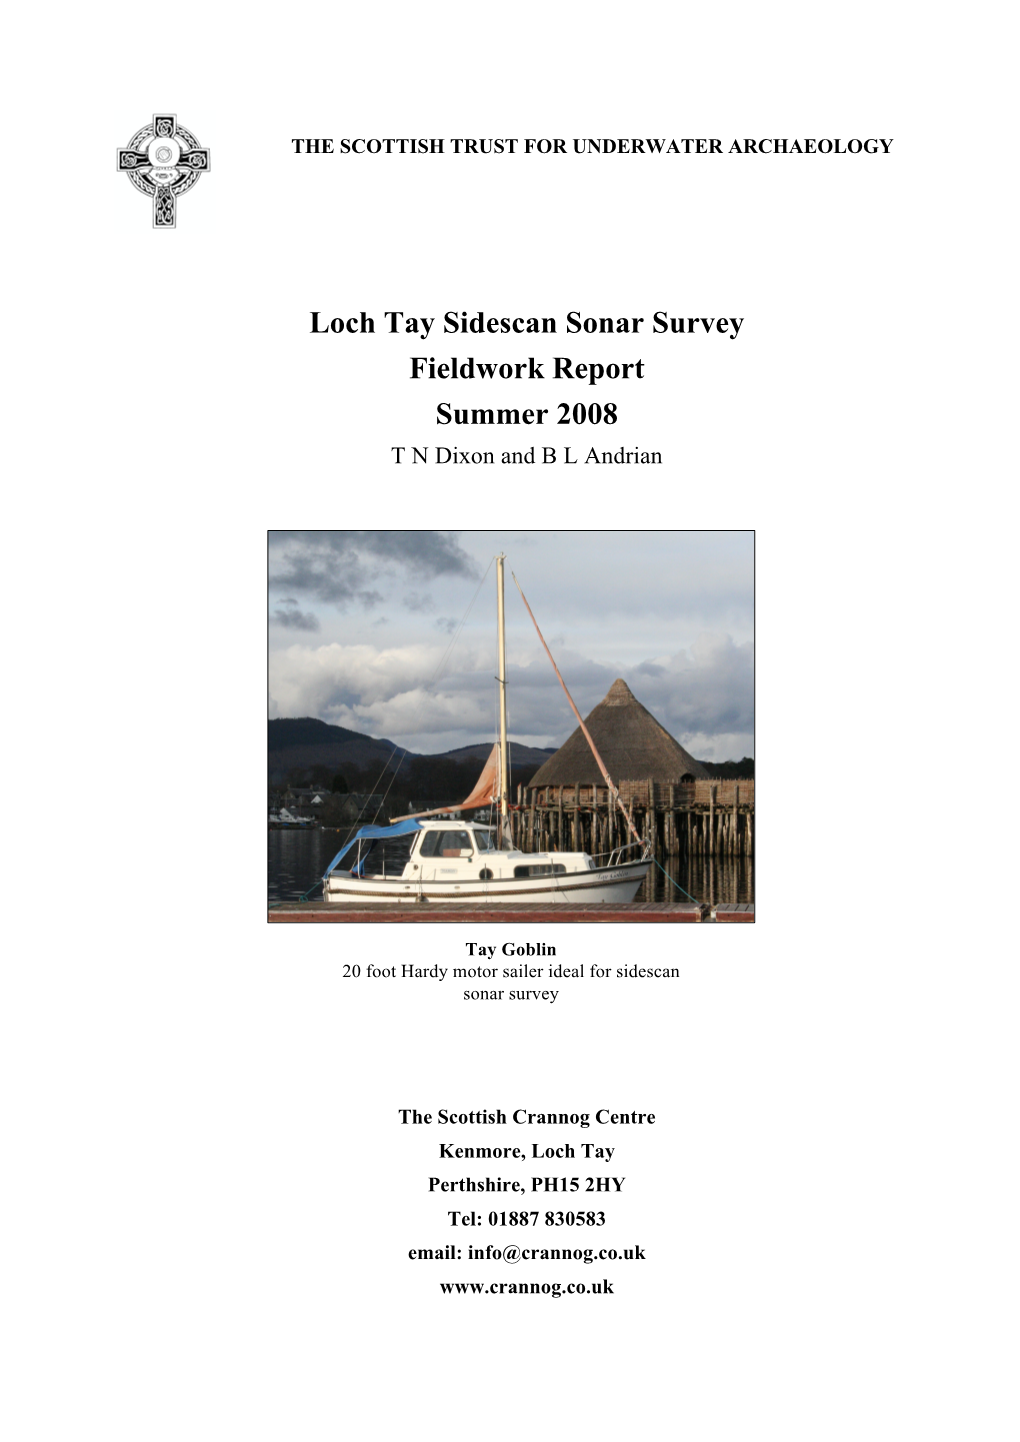 Loch Tay Sidescan Survey